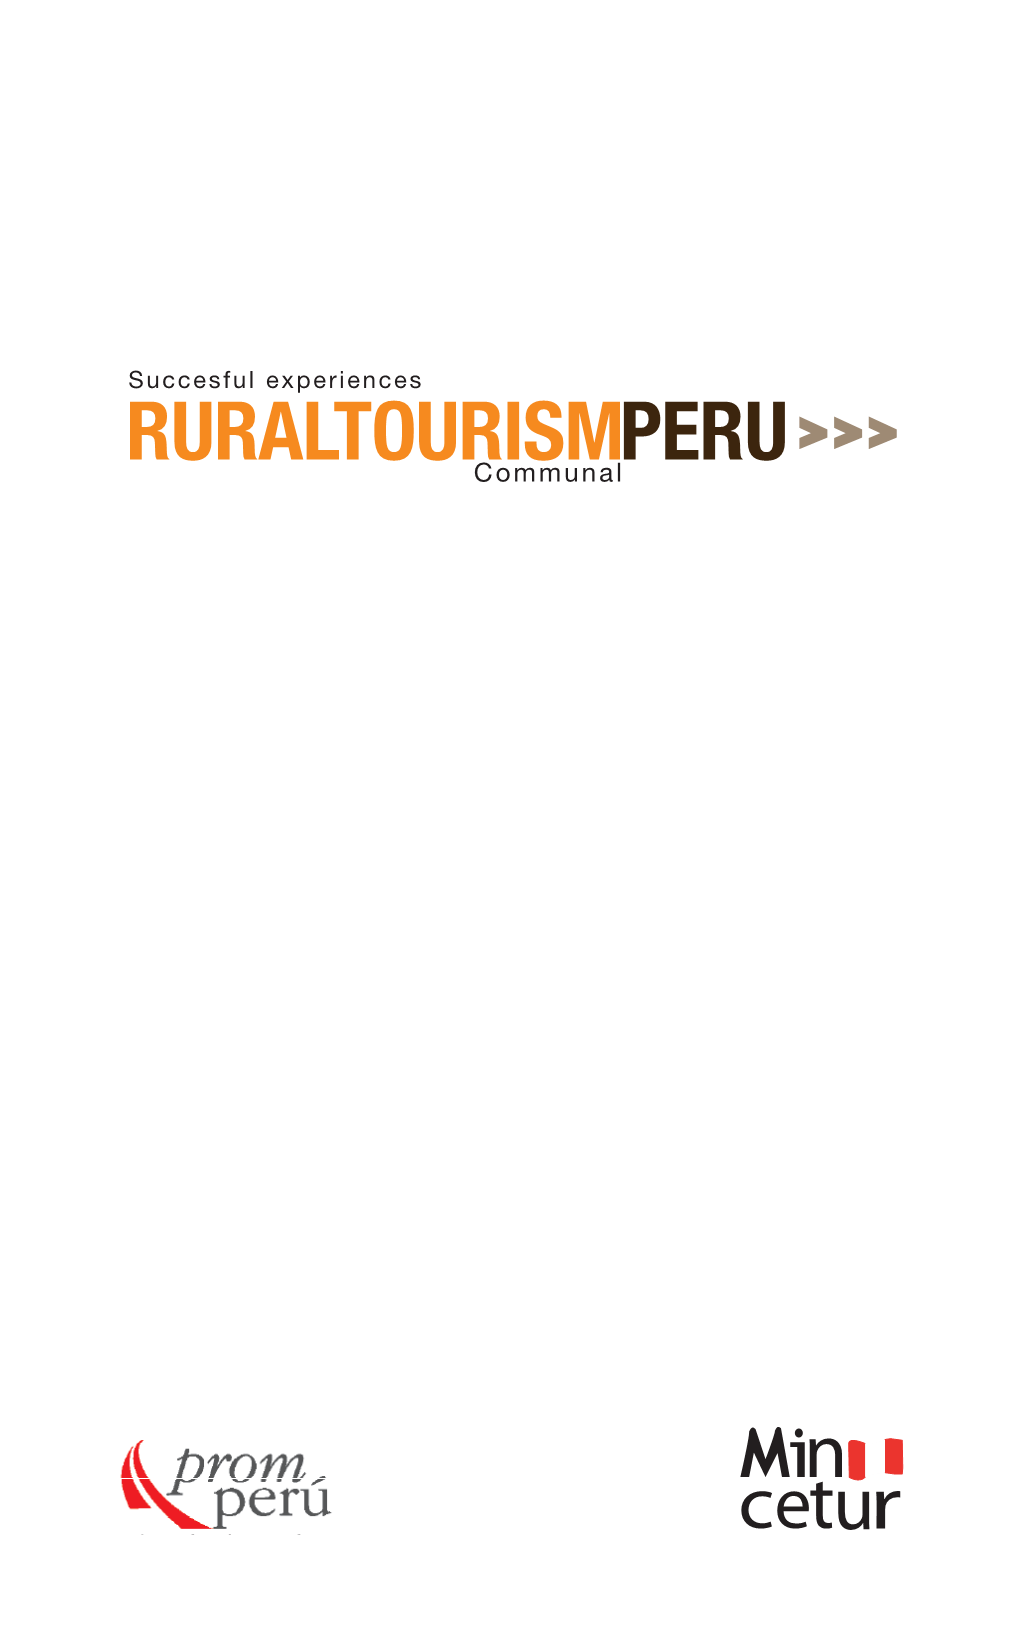 Peru Ruraltourism